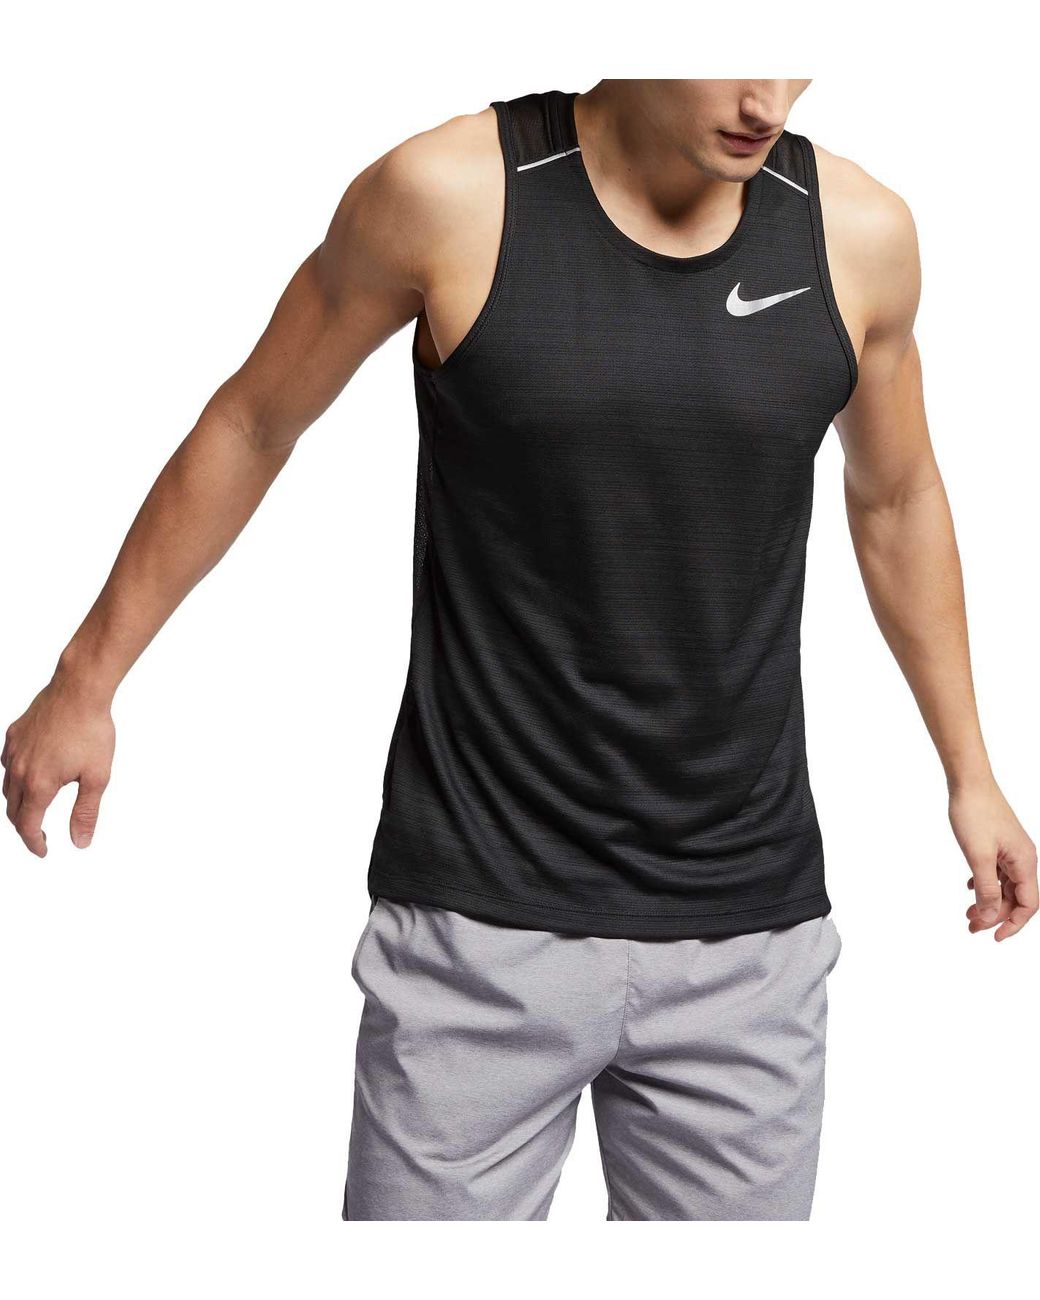 Nike Dry Miler Tank Top in Black for Men - Lyst